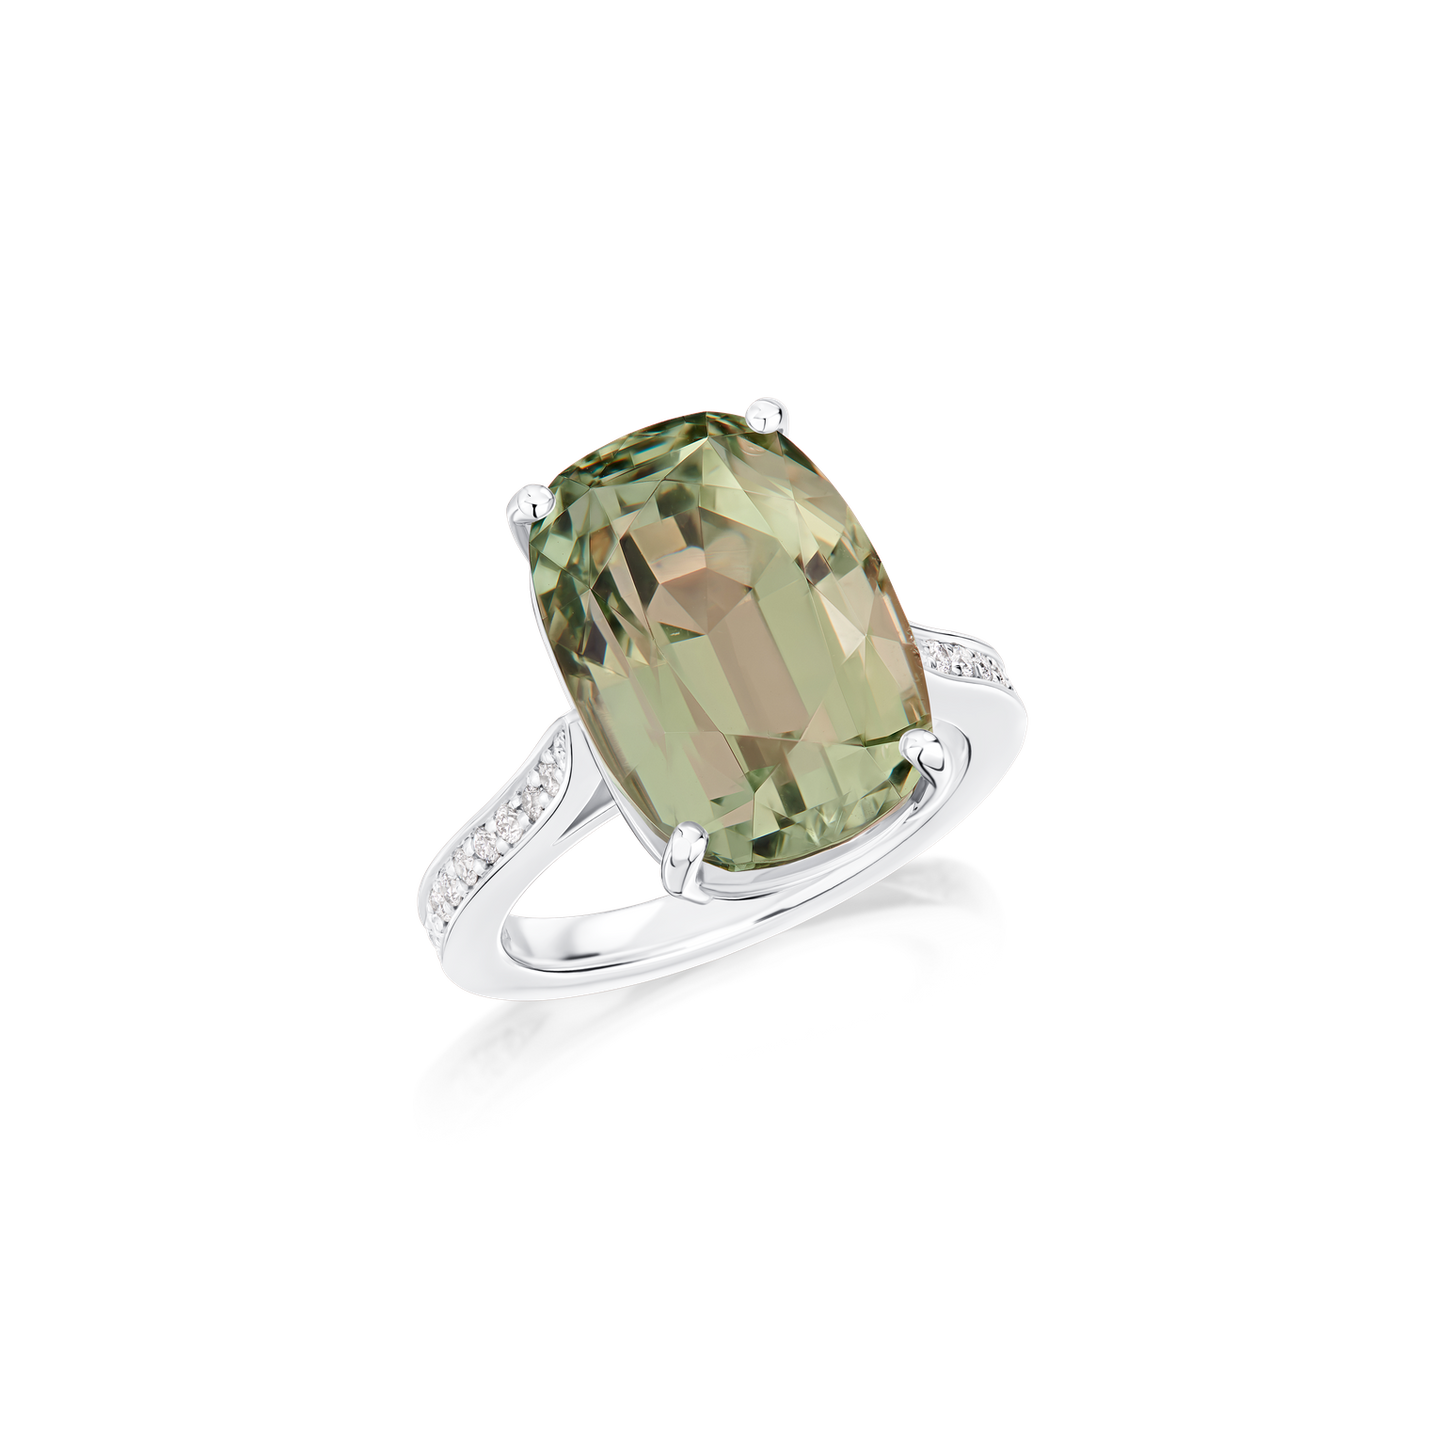 12.43cts Mint Beryl and Diamond Ring